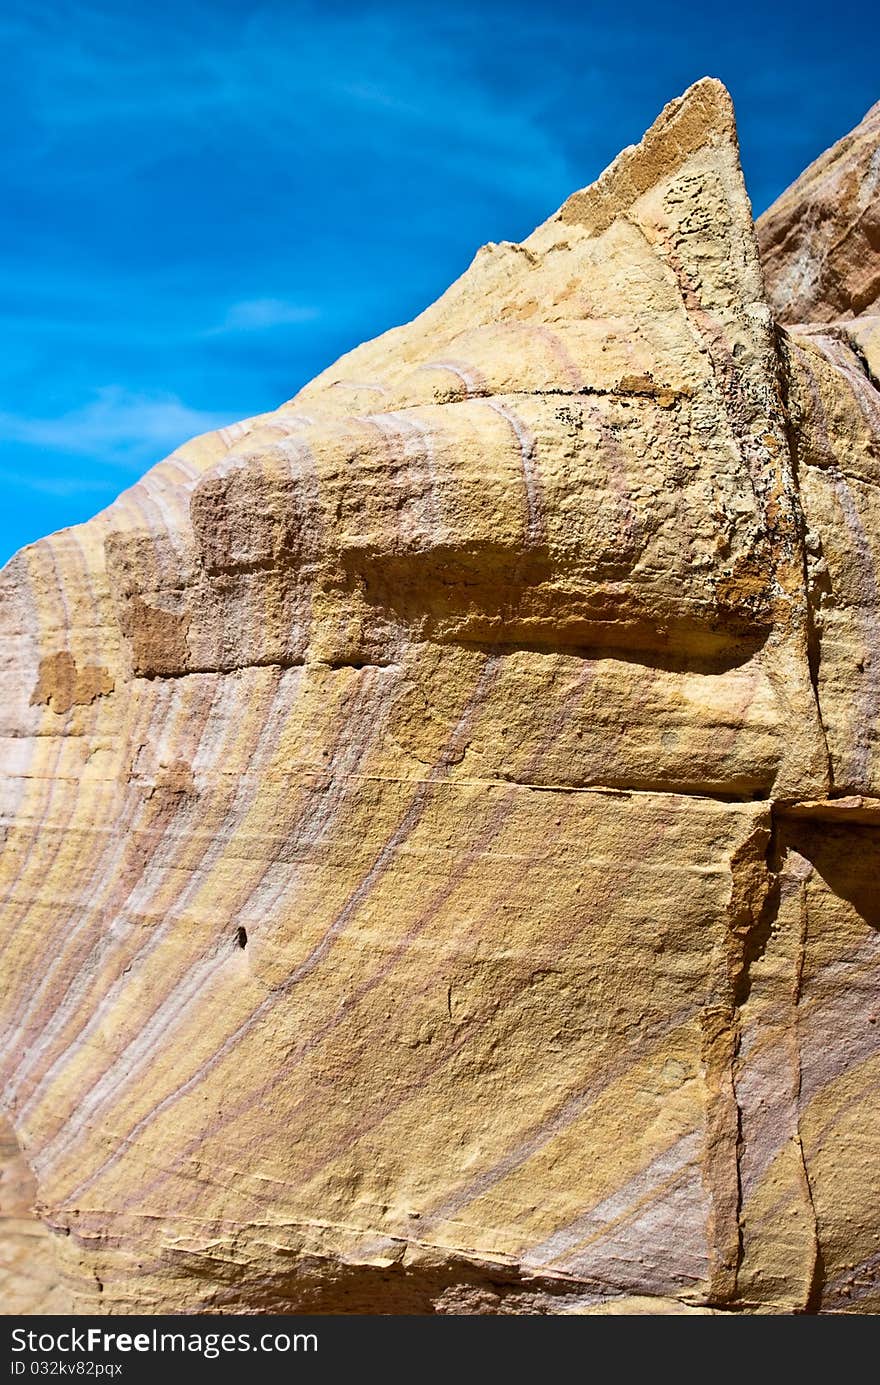 Sandstone rock formations imitate shark fins. Sandstone rock formations imitate shark fins